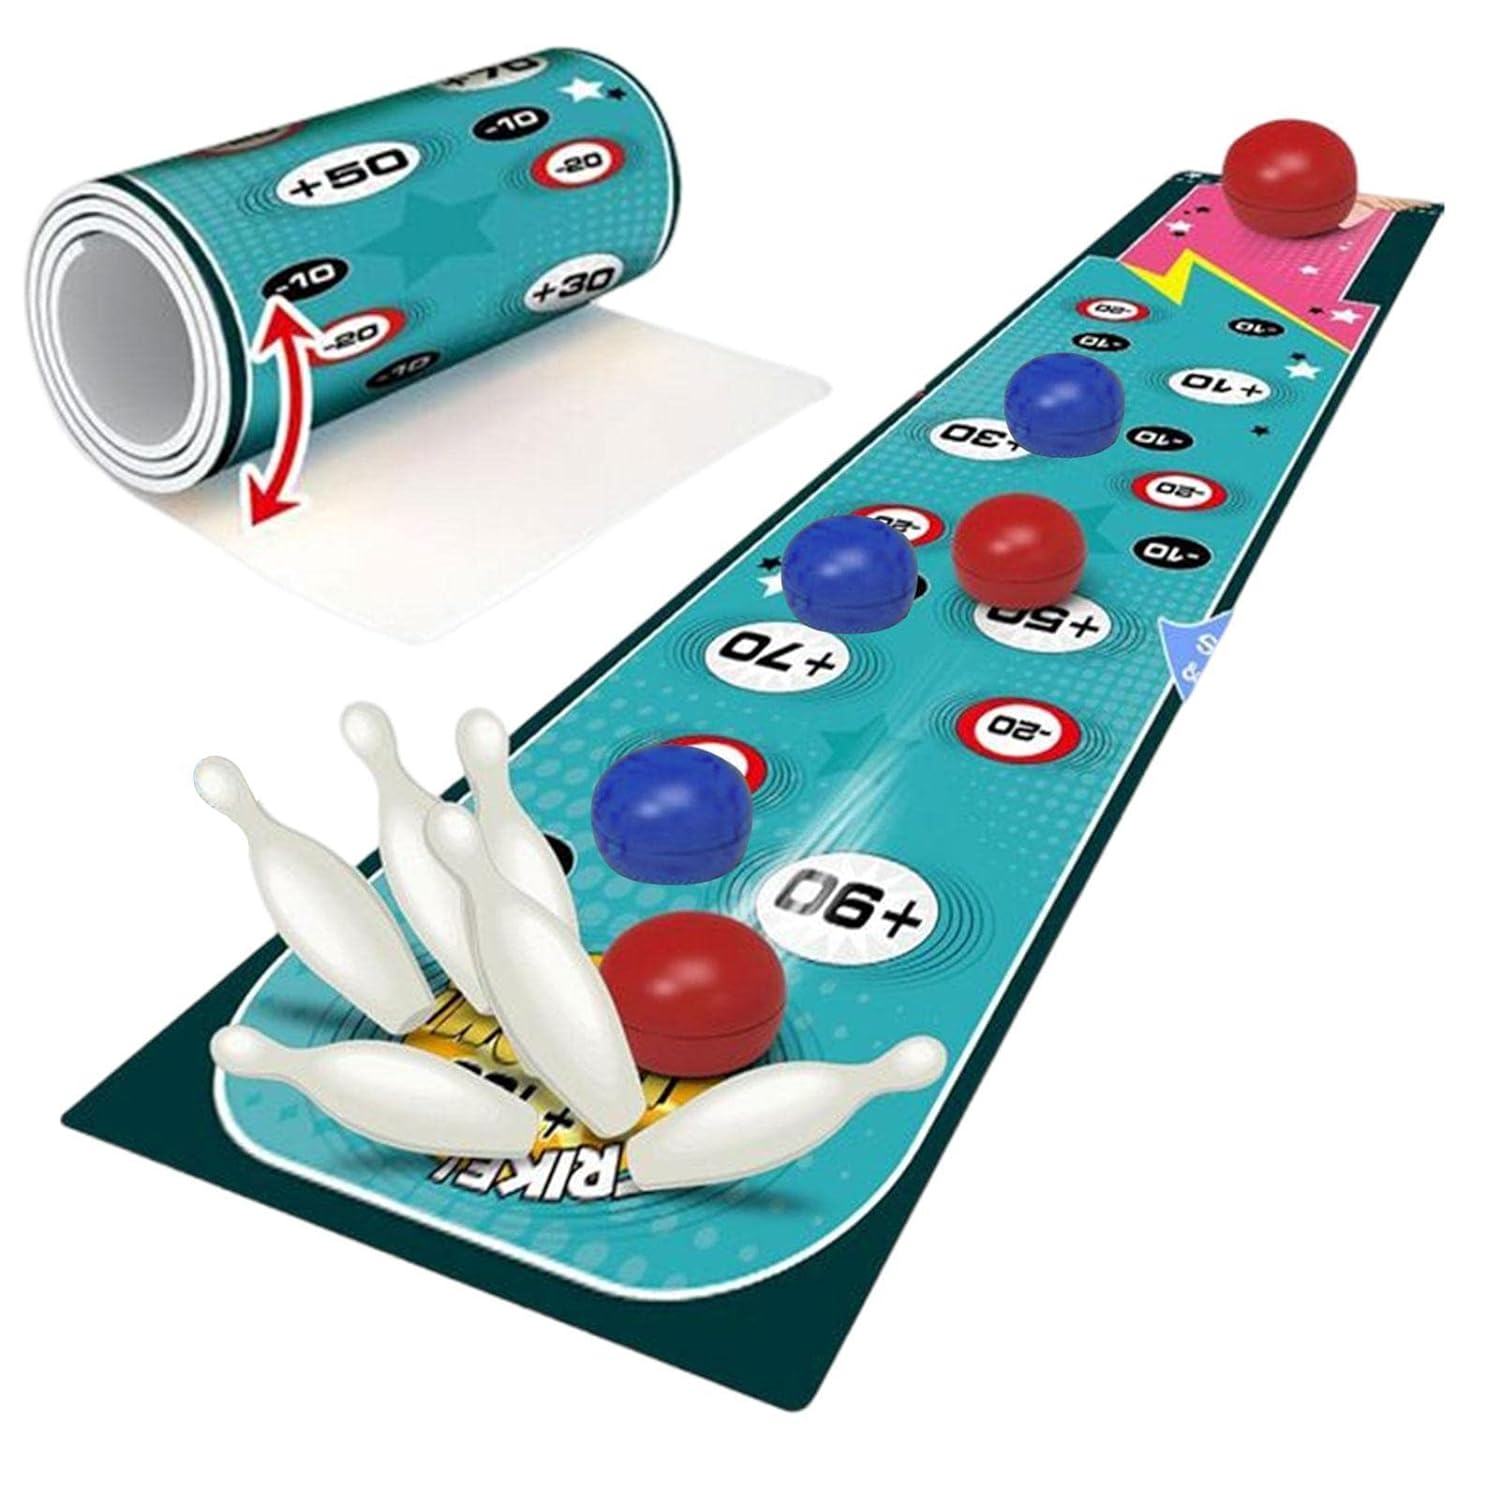 Tabletop Shuffleboard Game